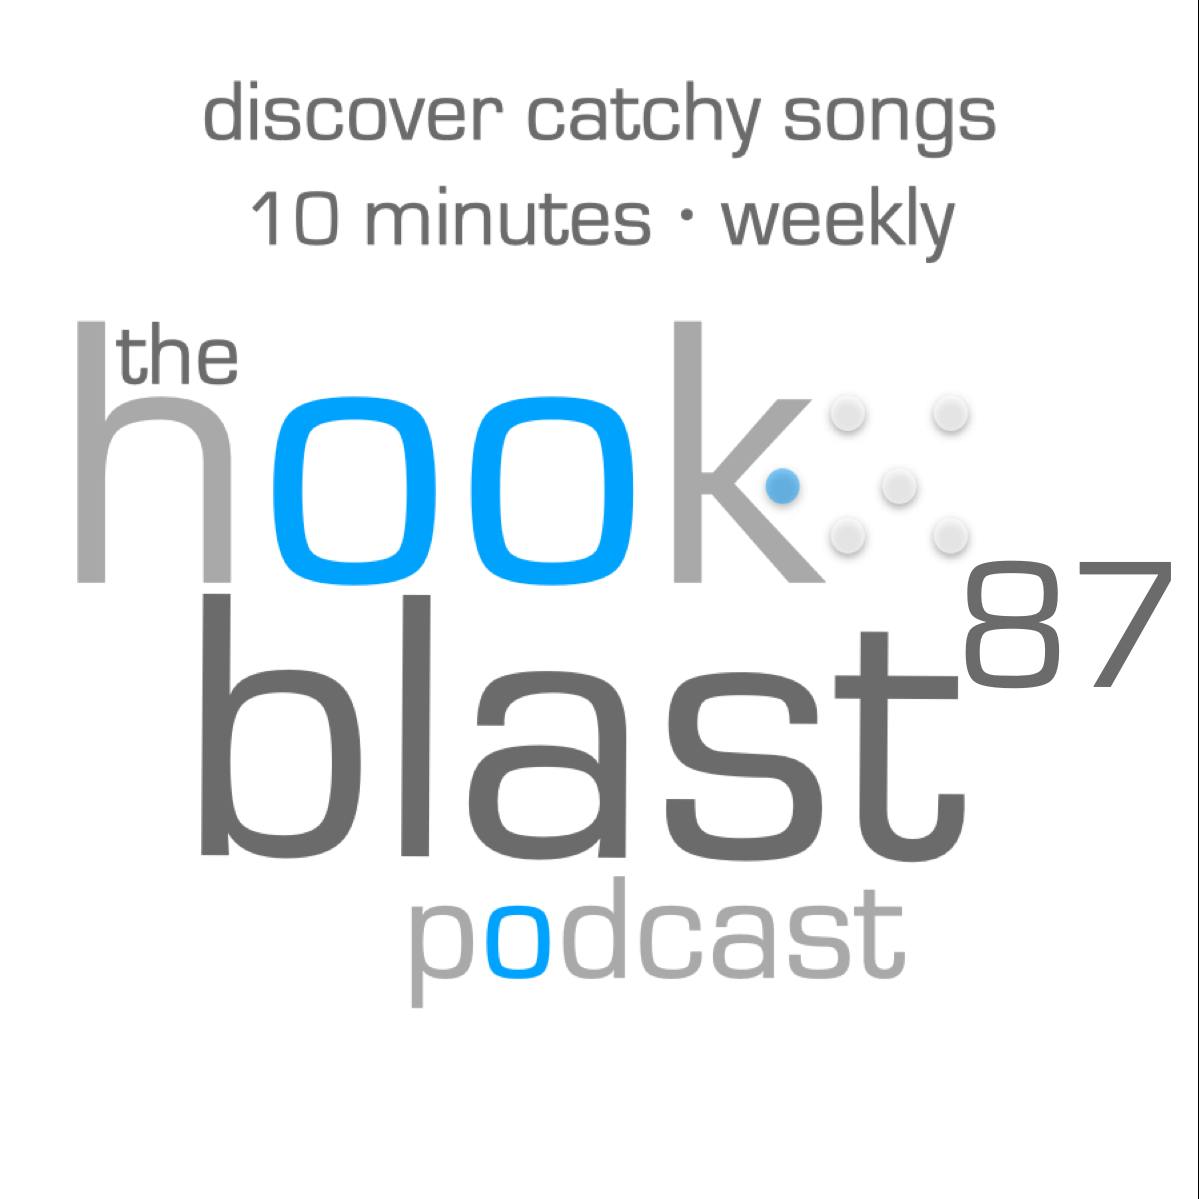 The Hookblast Podcast - Episode 87